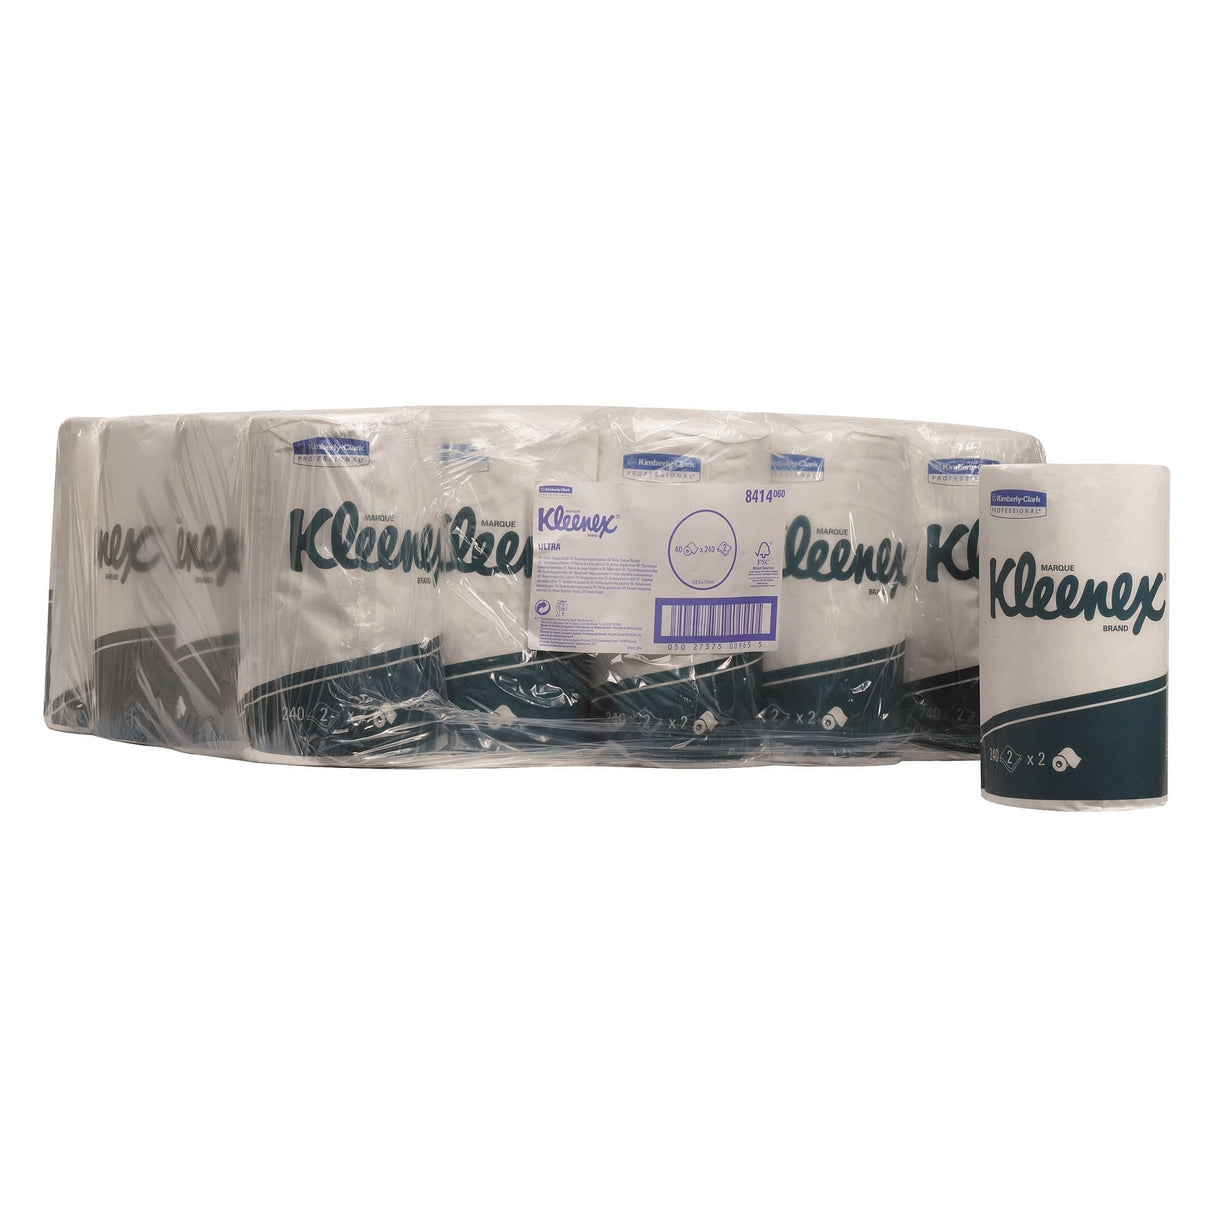 Kleenex 8414 Ultra Toilet Tissue Rolls 2 Ply White Pack of 20x2